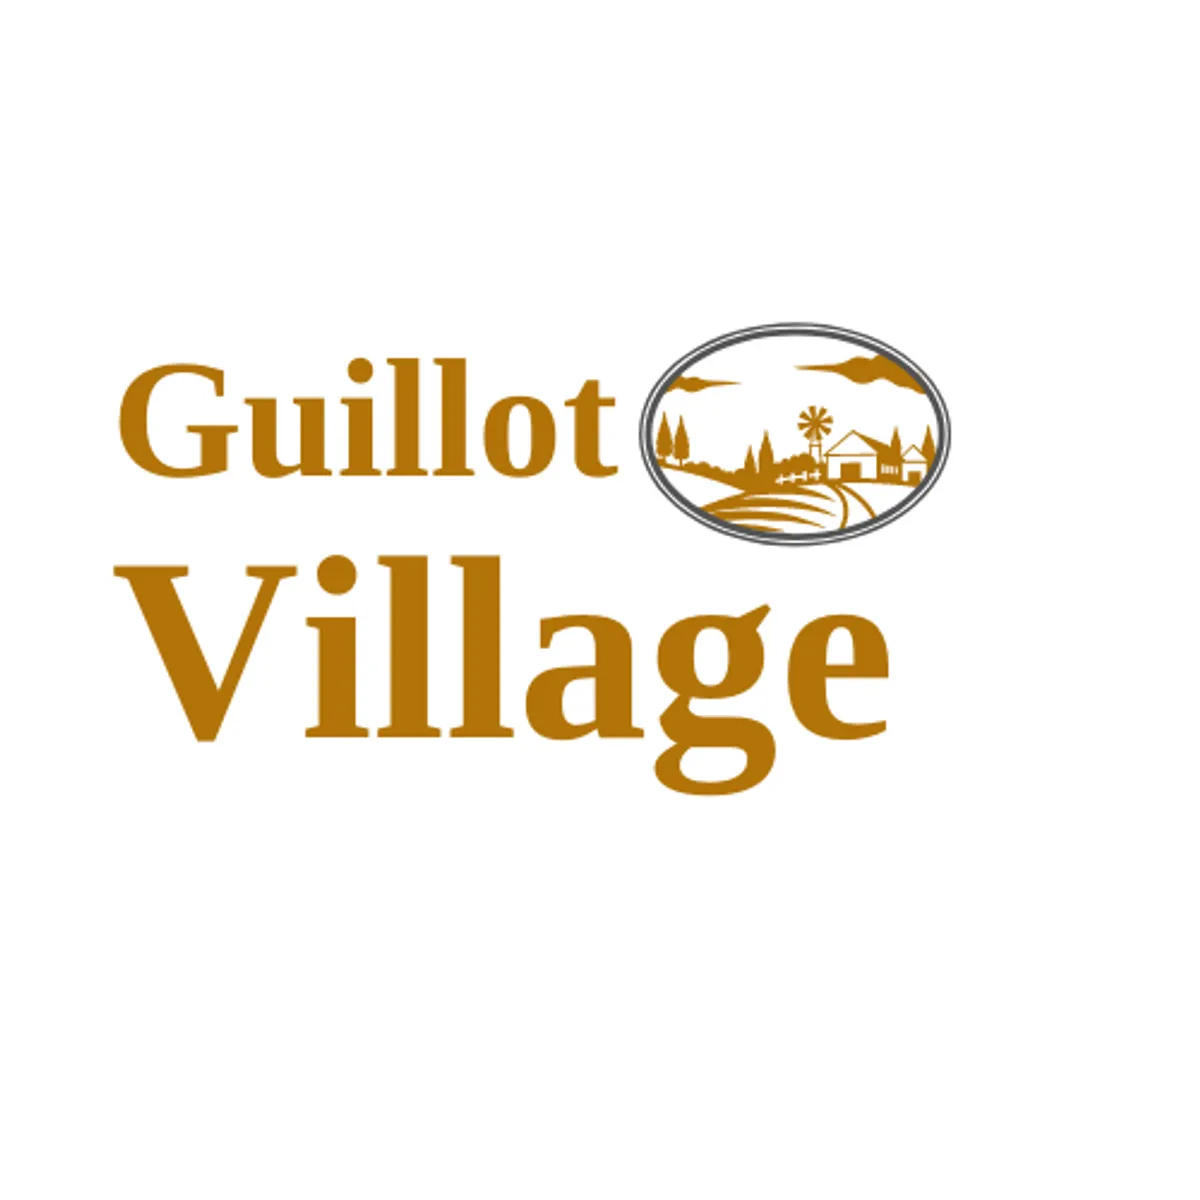 Guillot Village